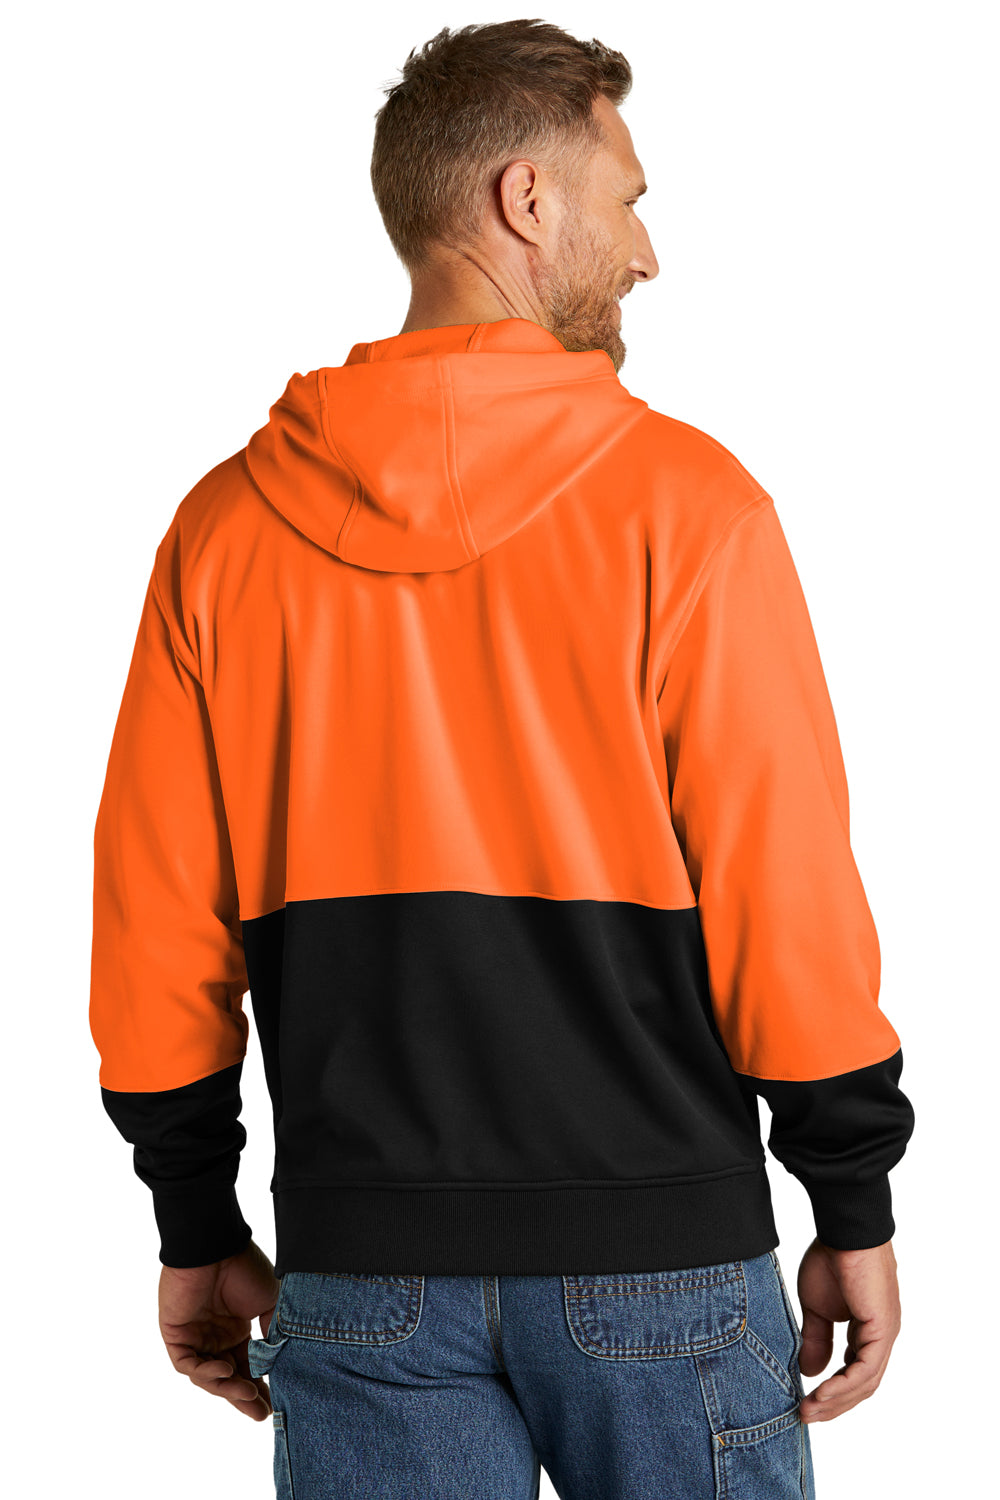 CornerStone CSF01 Enhanced Visibility Fleece Hooded Sweatshirt Hoodie Safety Orange Back